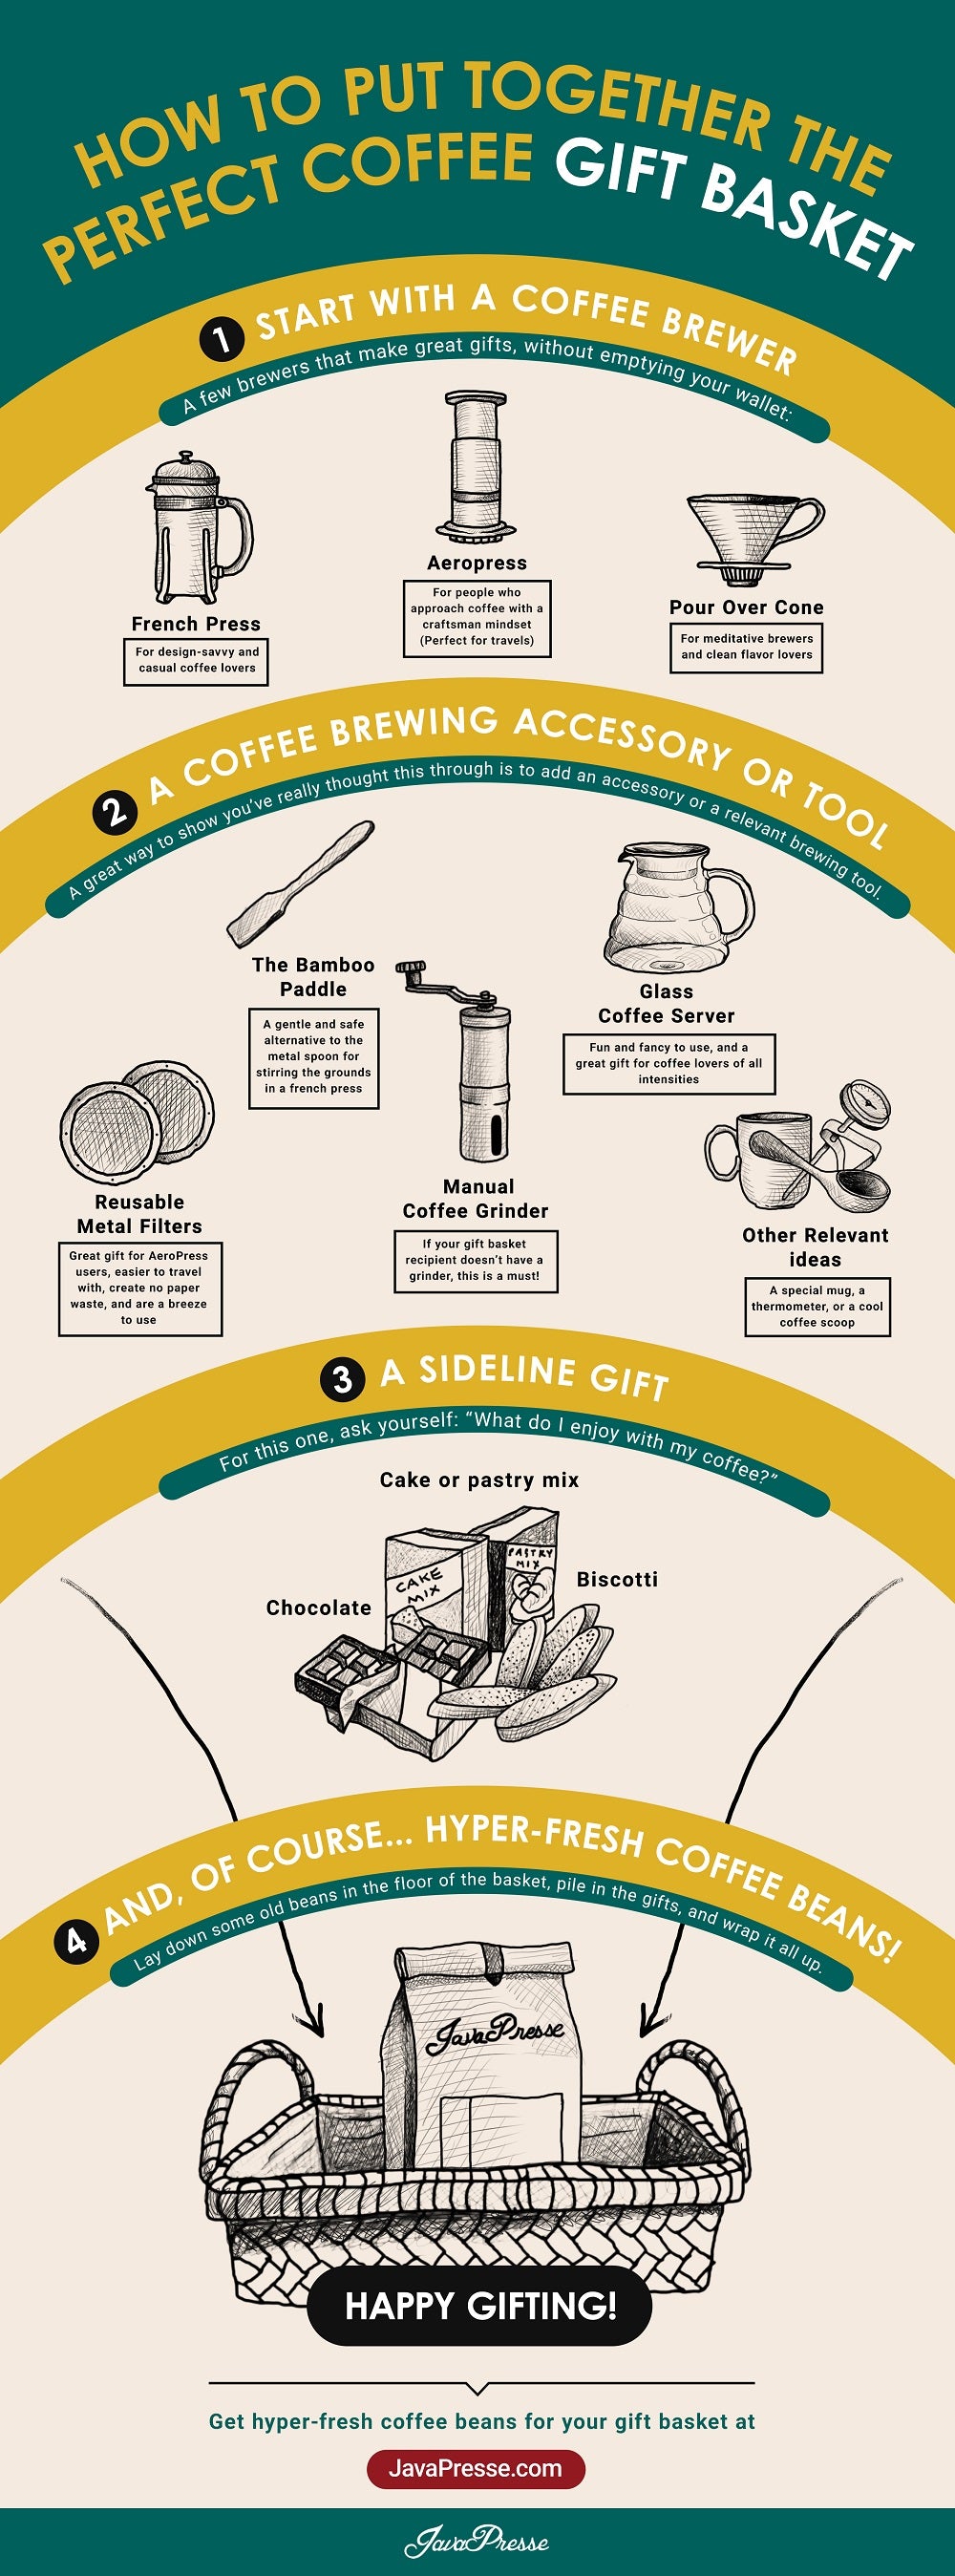 coffee gift basket ideas